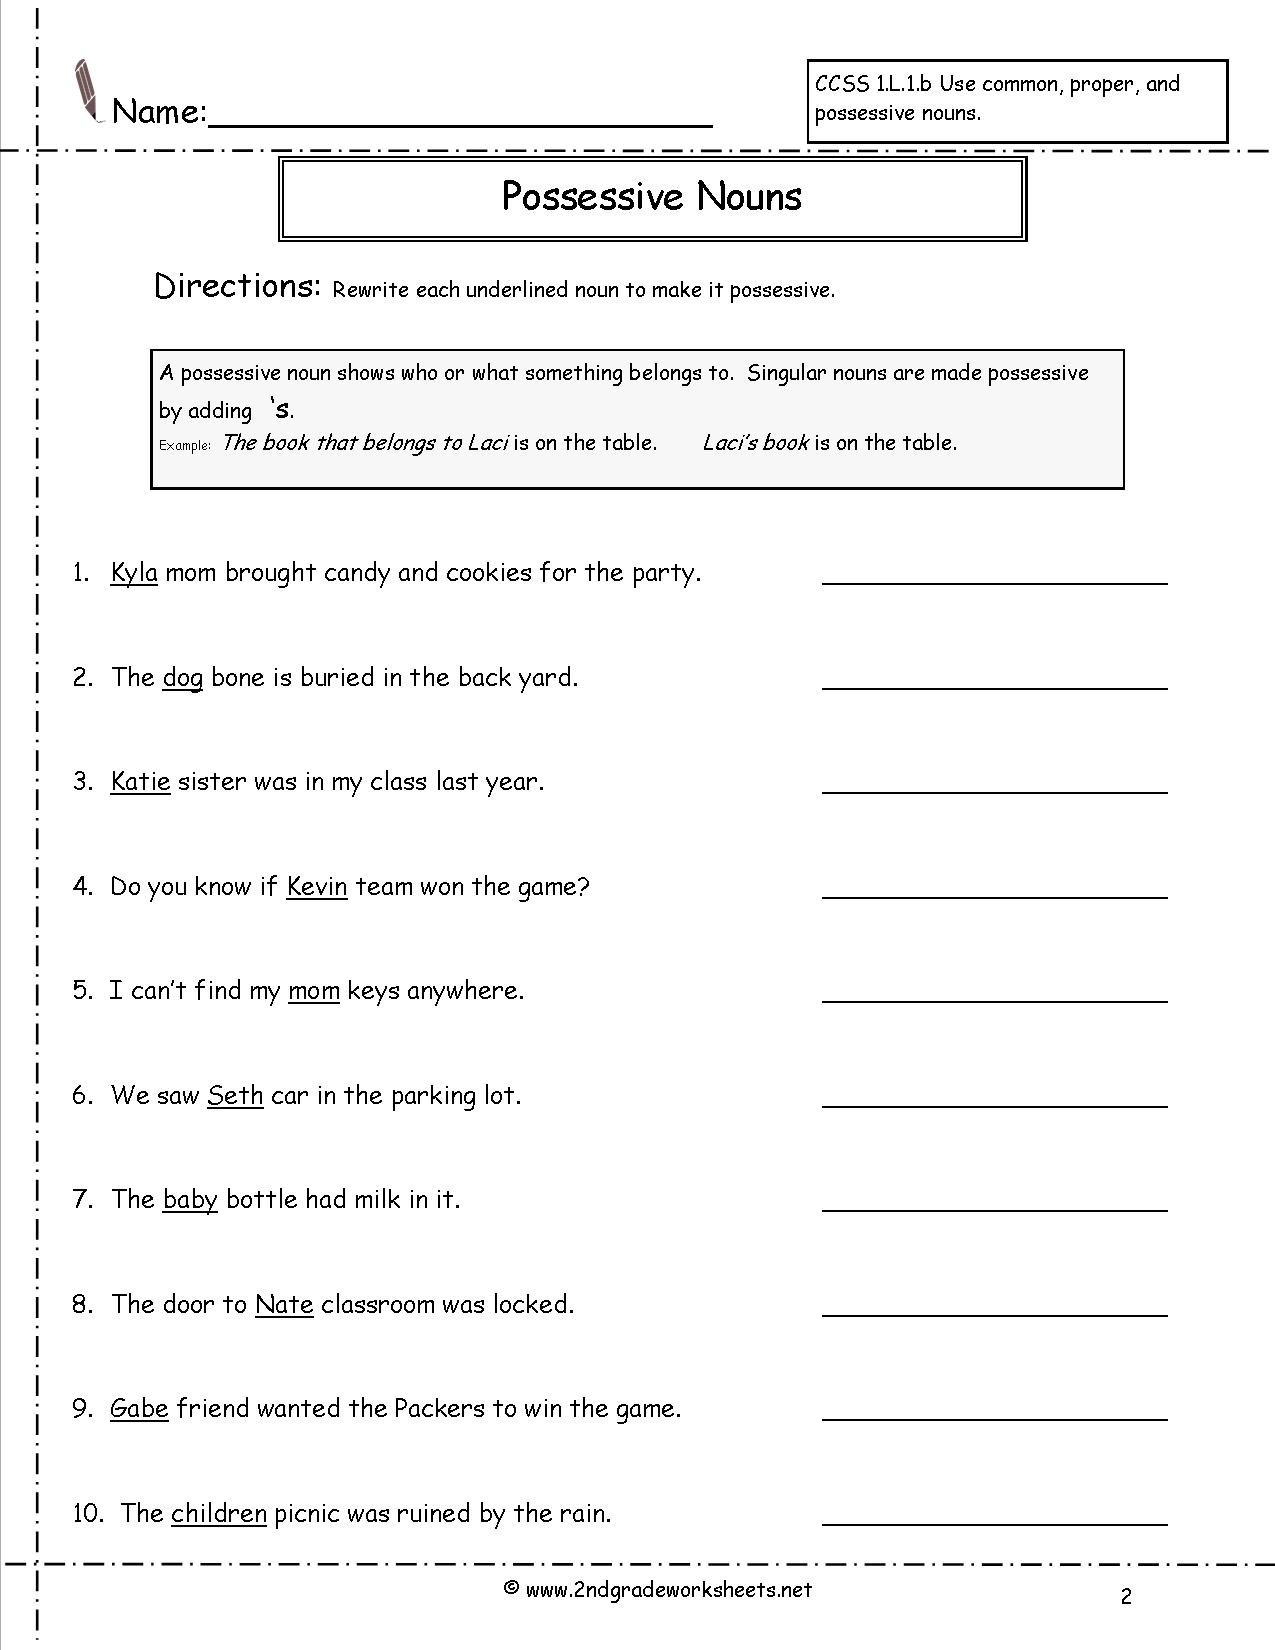 possessive-pronouns-worksheet-3rd-grade-1251936-free-worksheets-samples